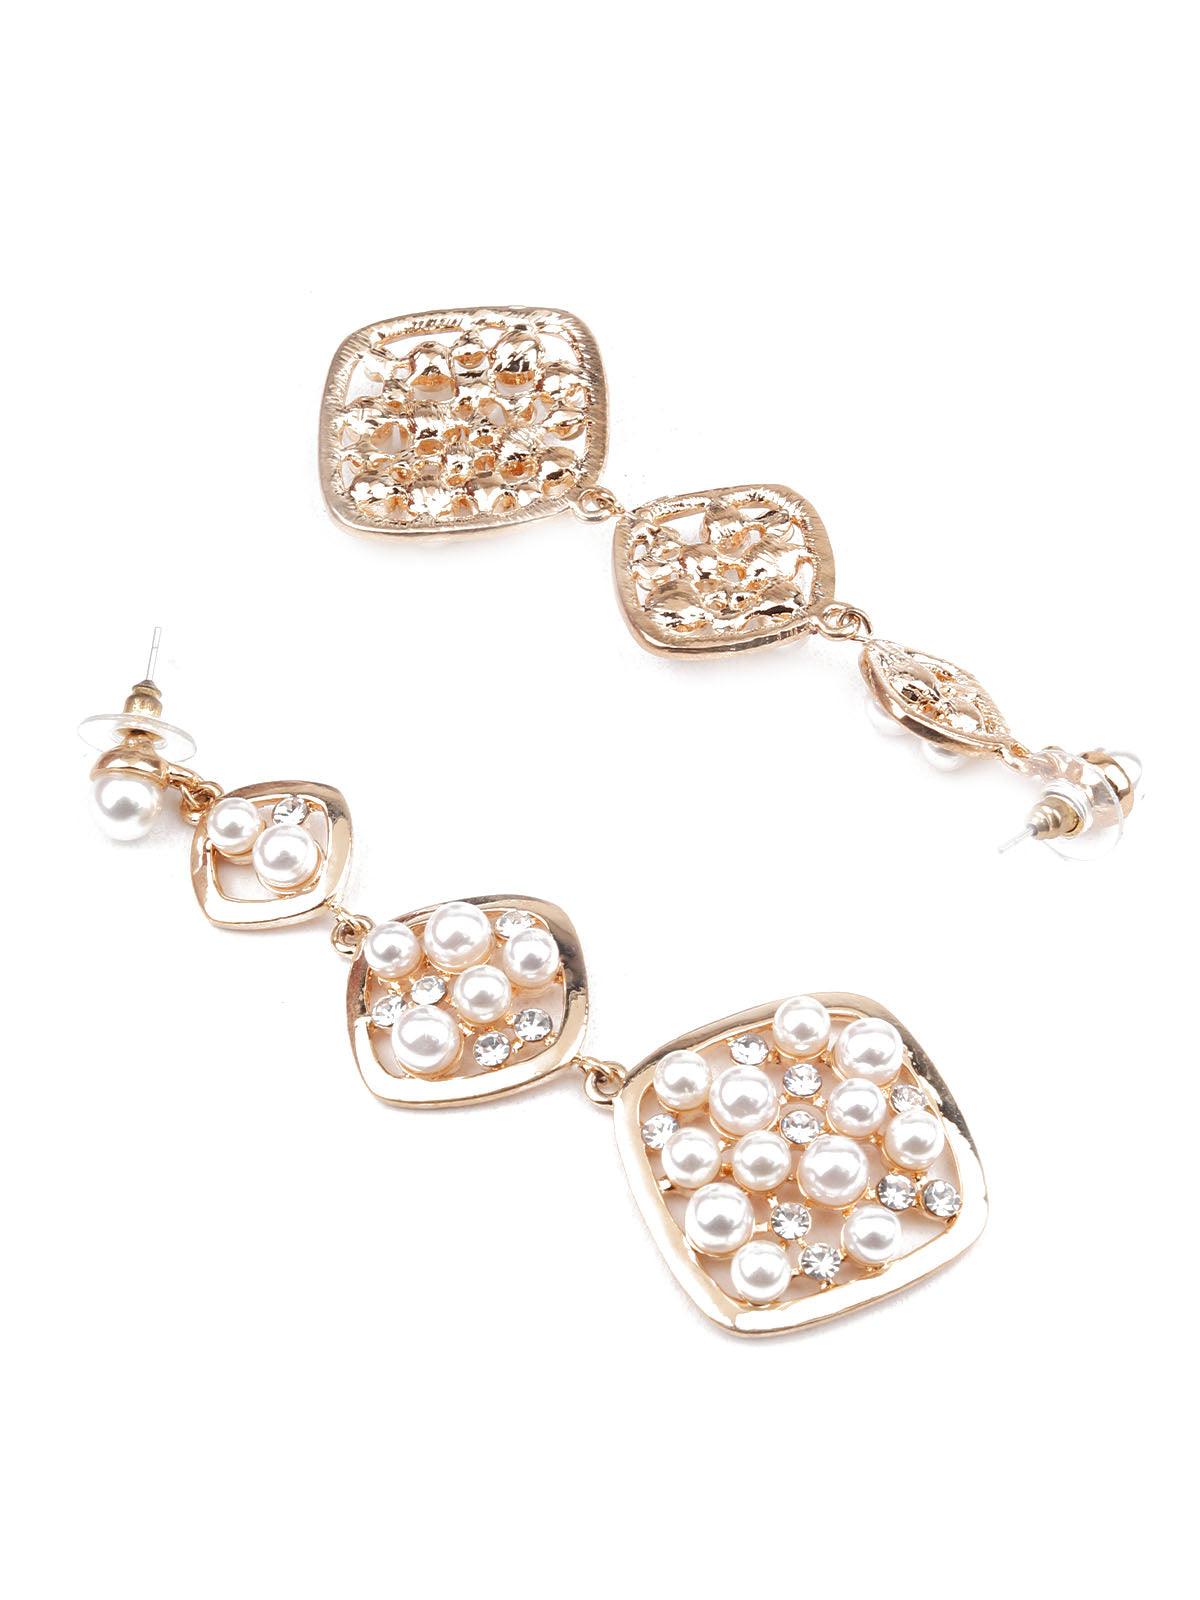 Women's Classy White And Gold Faux Pearl Dangle Earrings - Odette